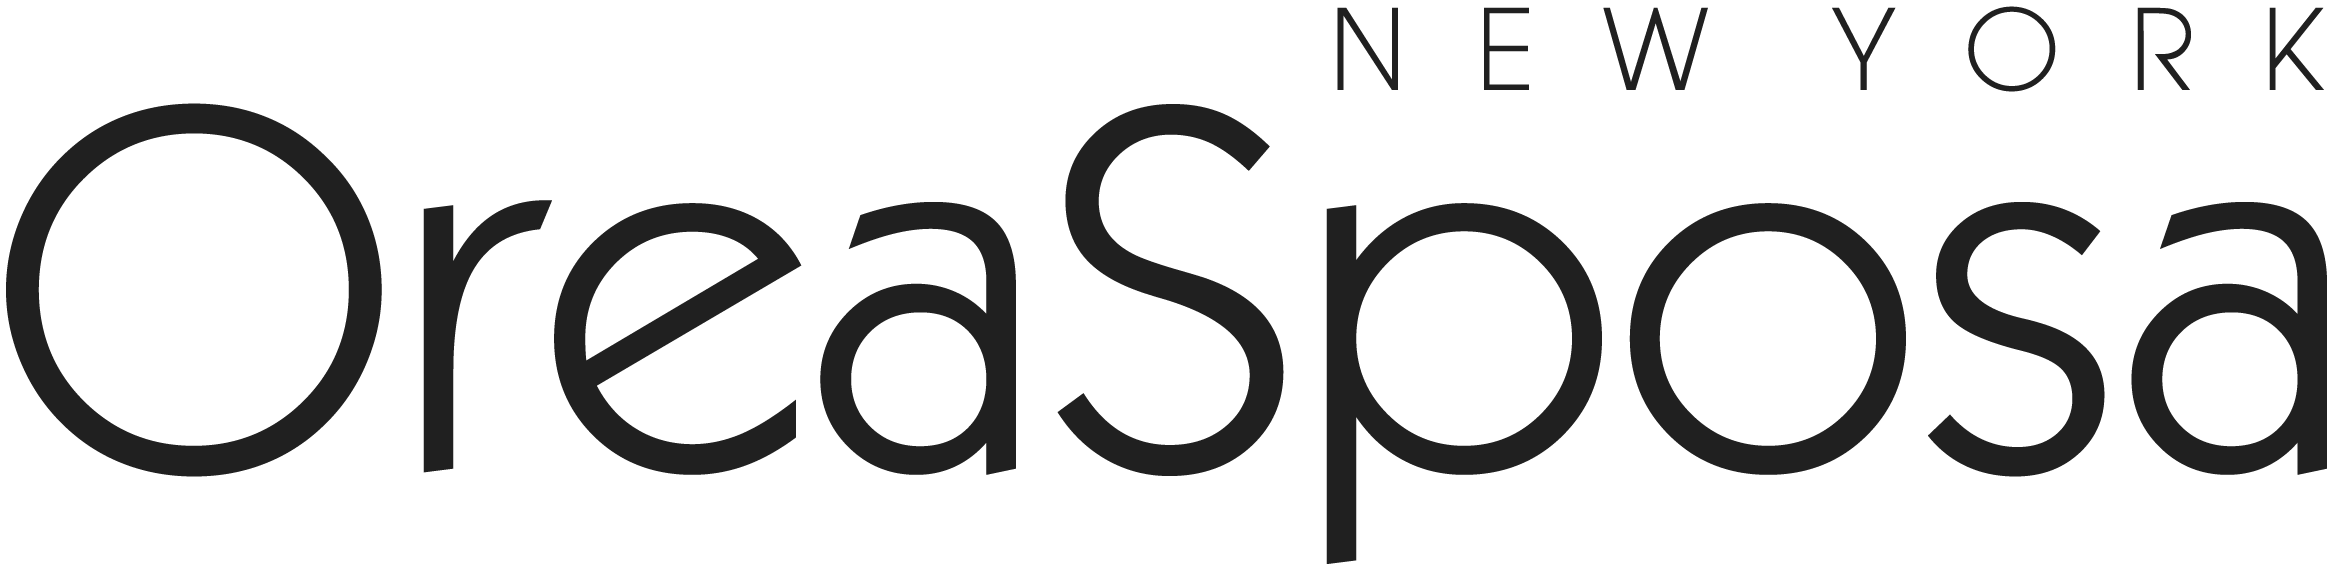 OreaSposa New York Logo